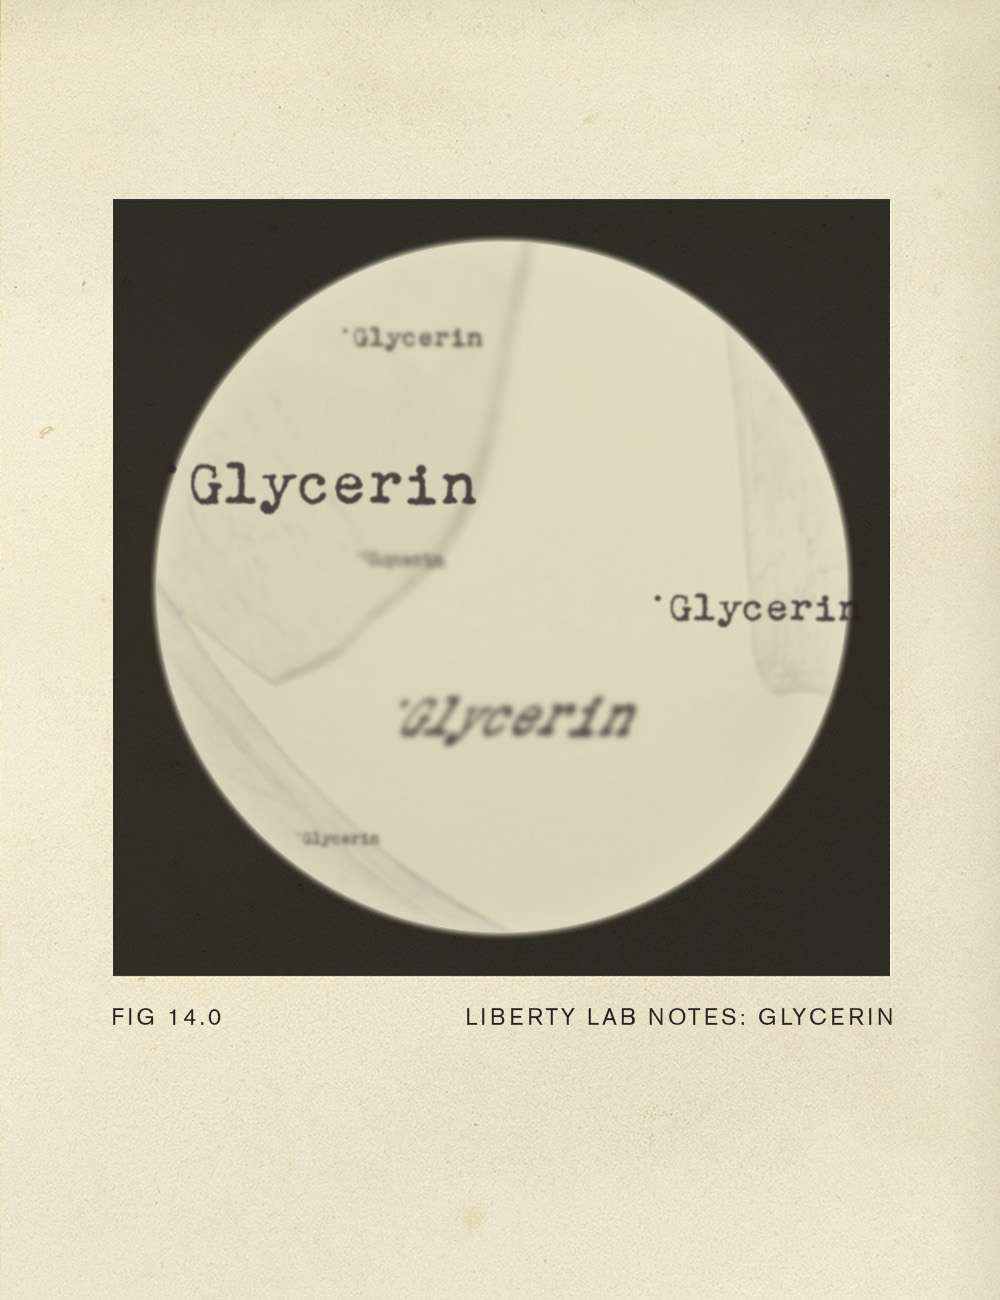 Meet Glycerin, the Unsung Hero of Skincare